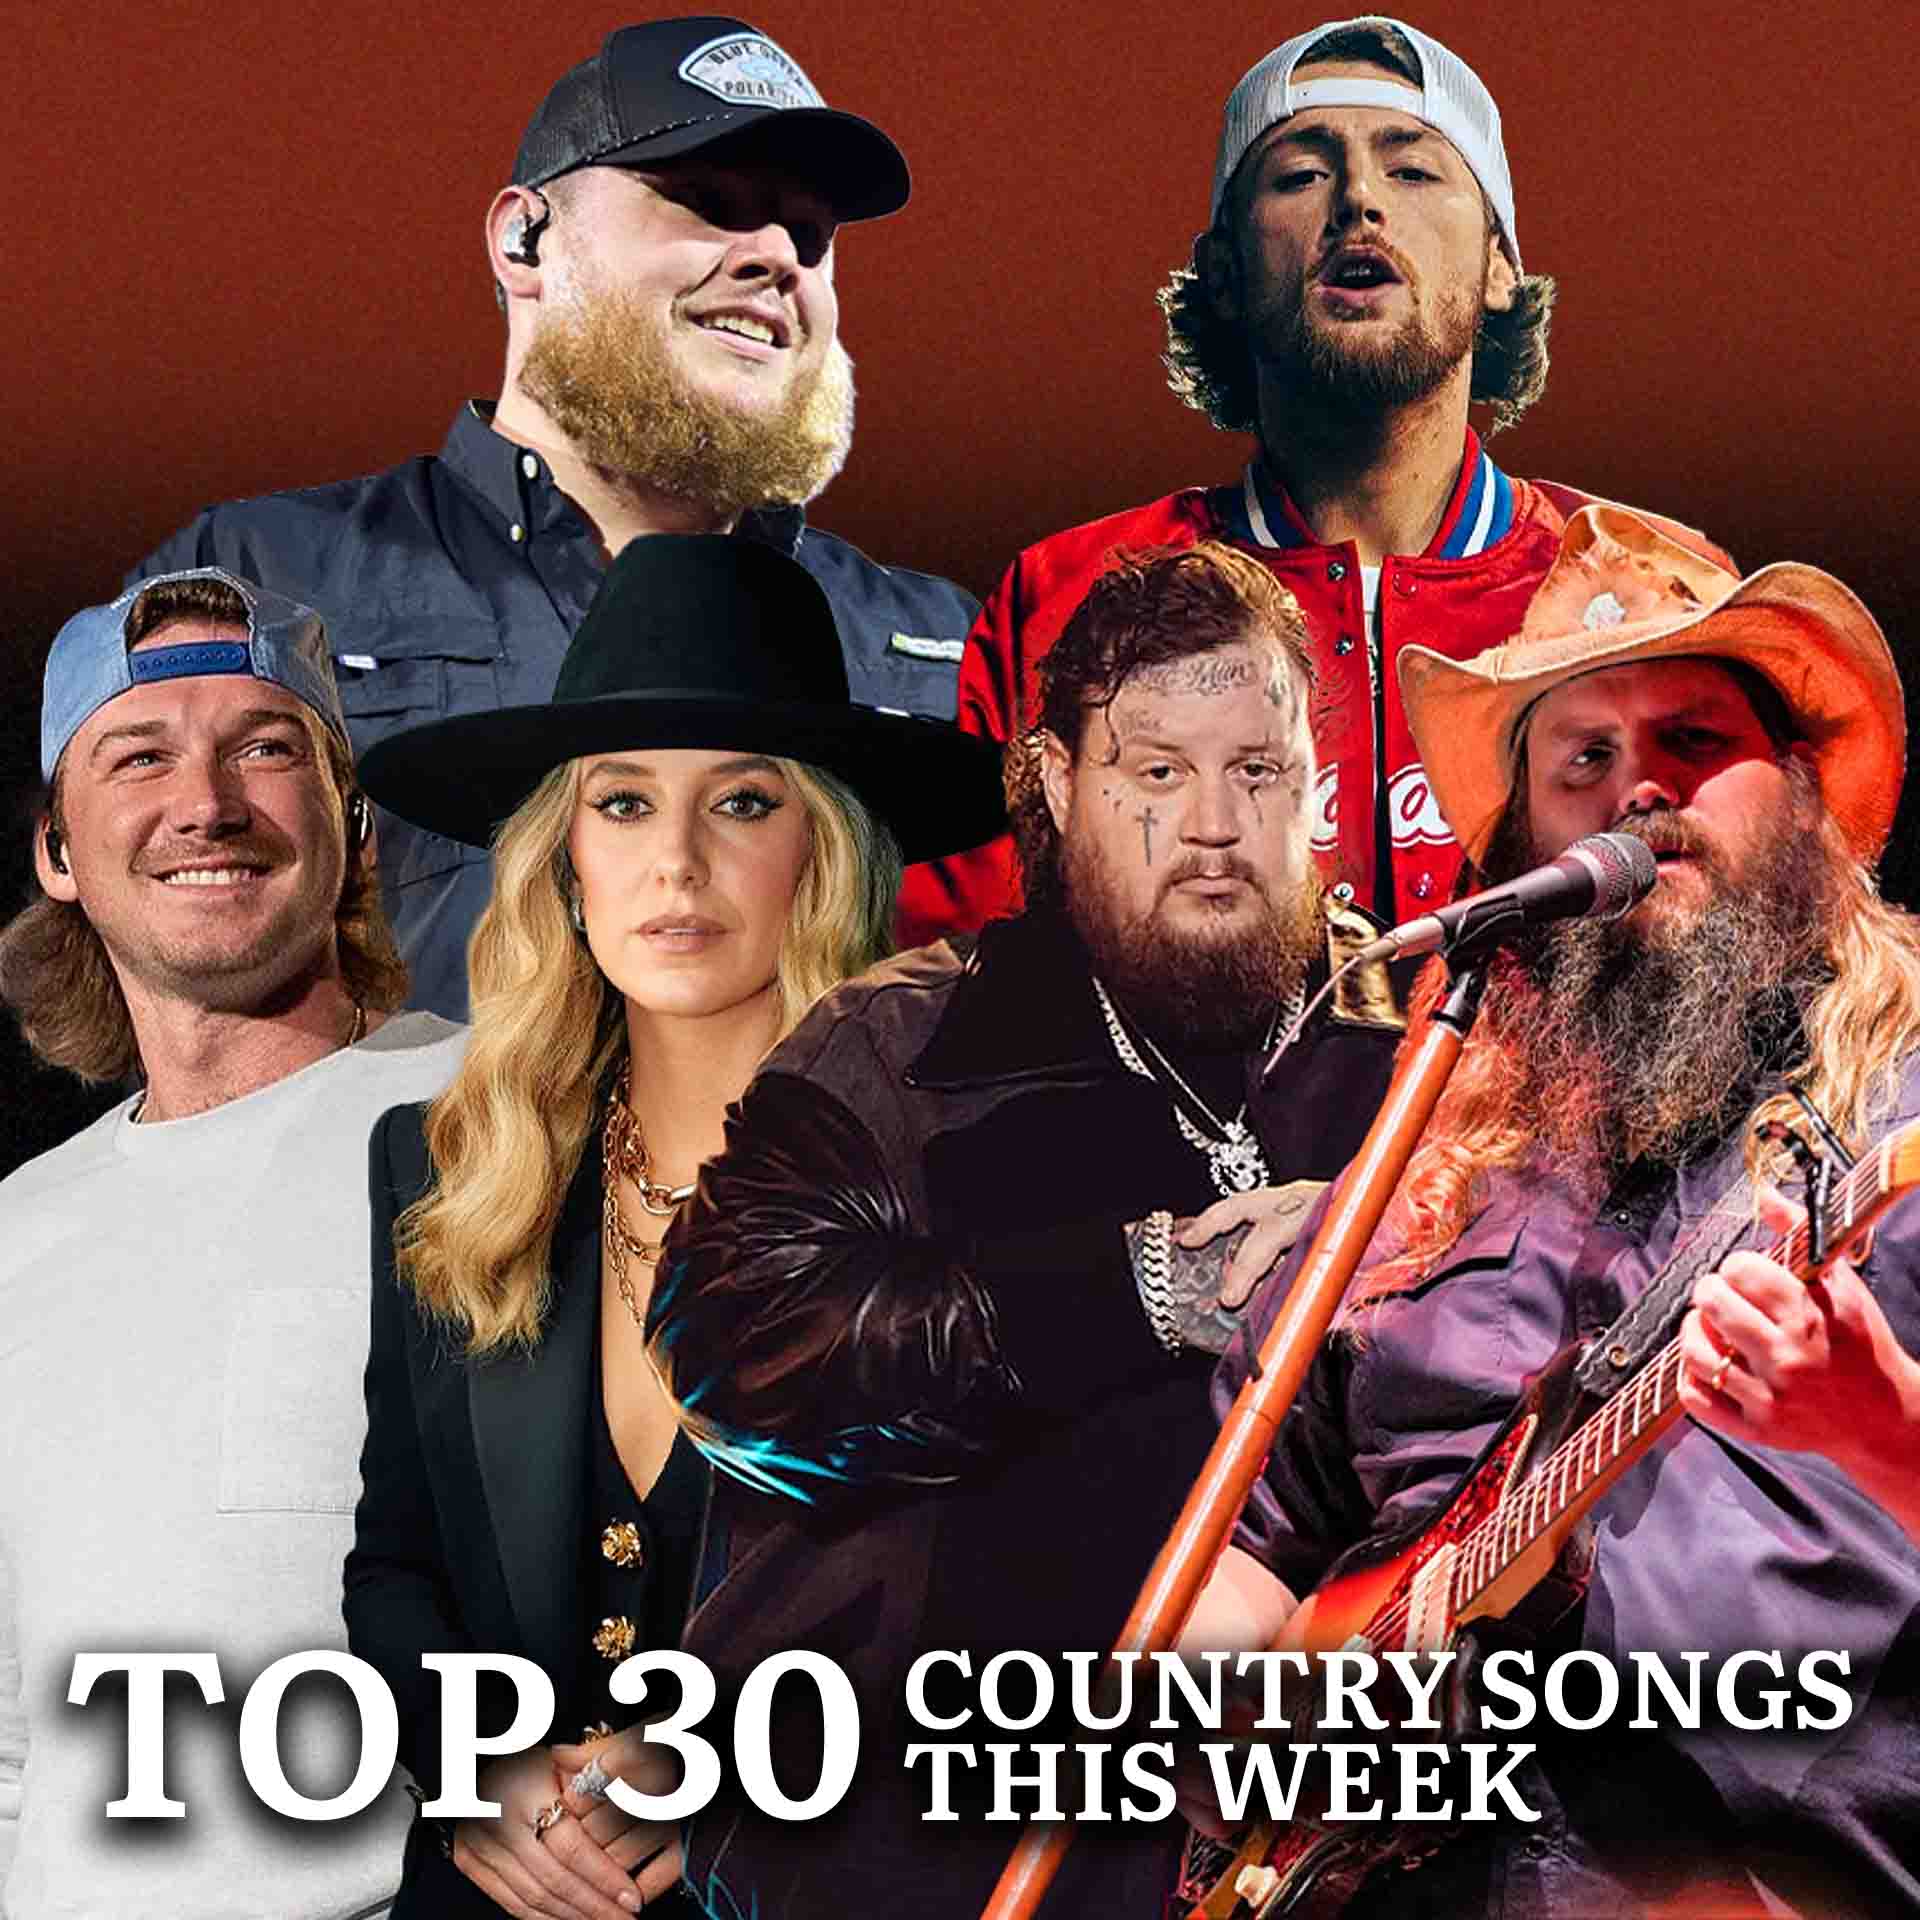 Top 30 Country Songs This Week